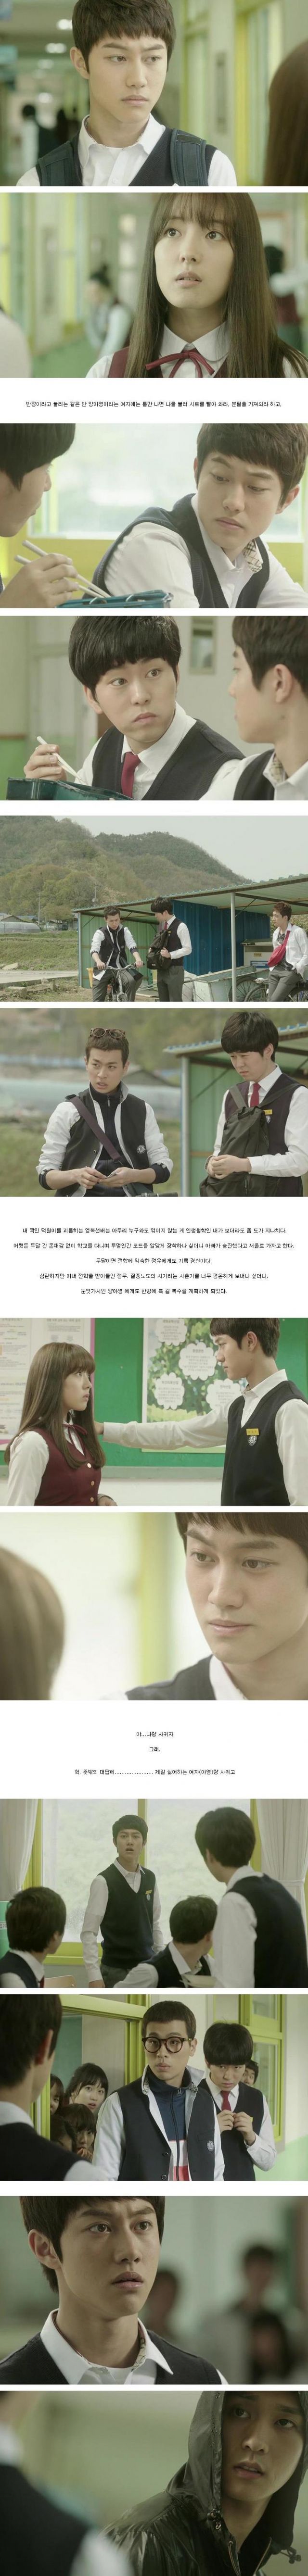 episode 2 captures for the Korean drama 'Drama Special - Adolescence Medley'